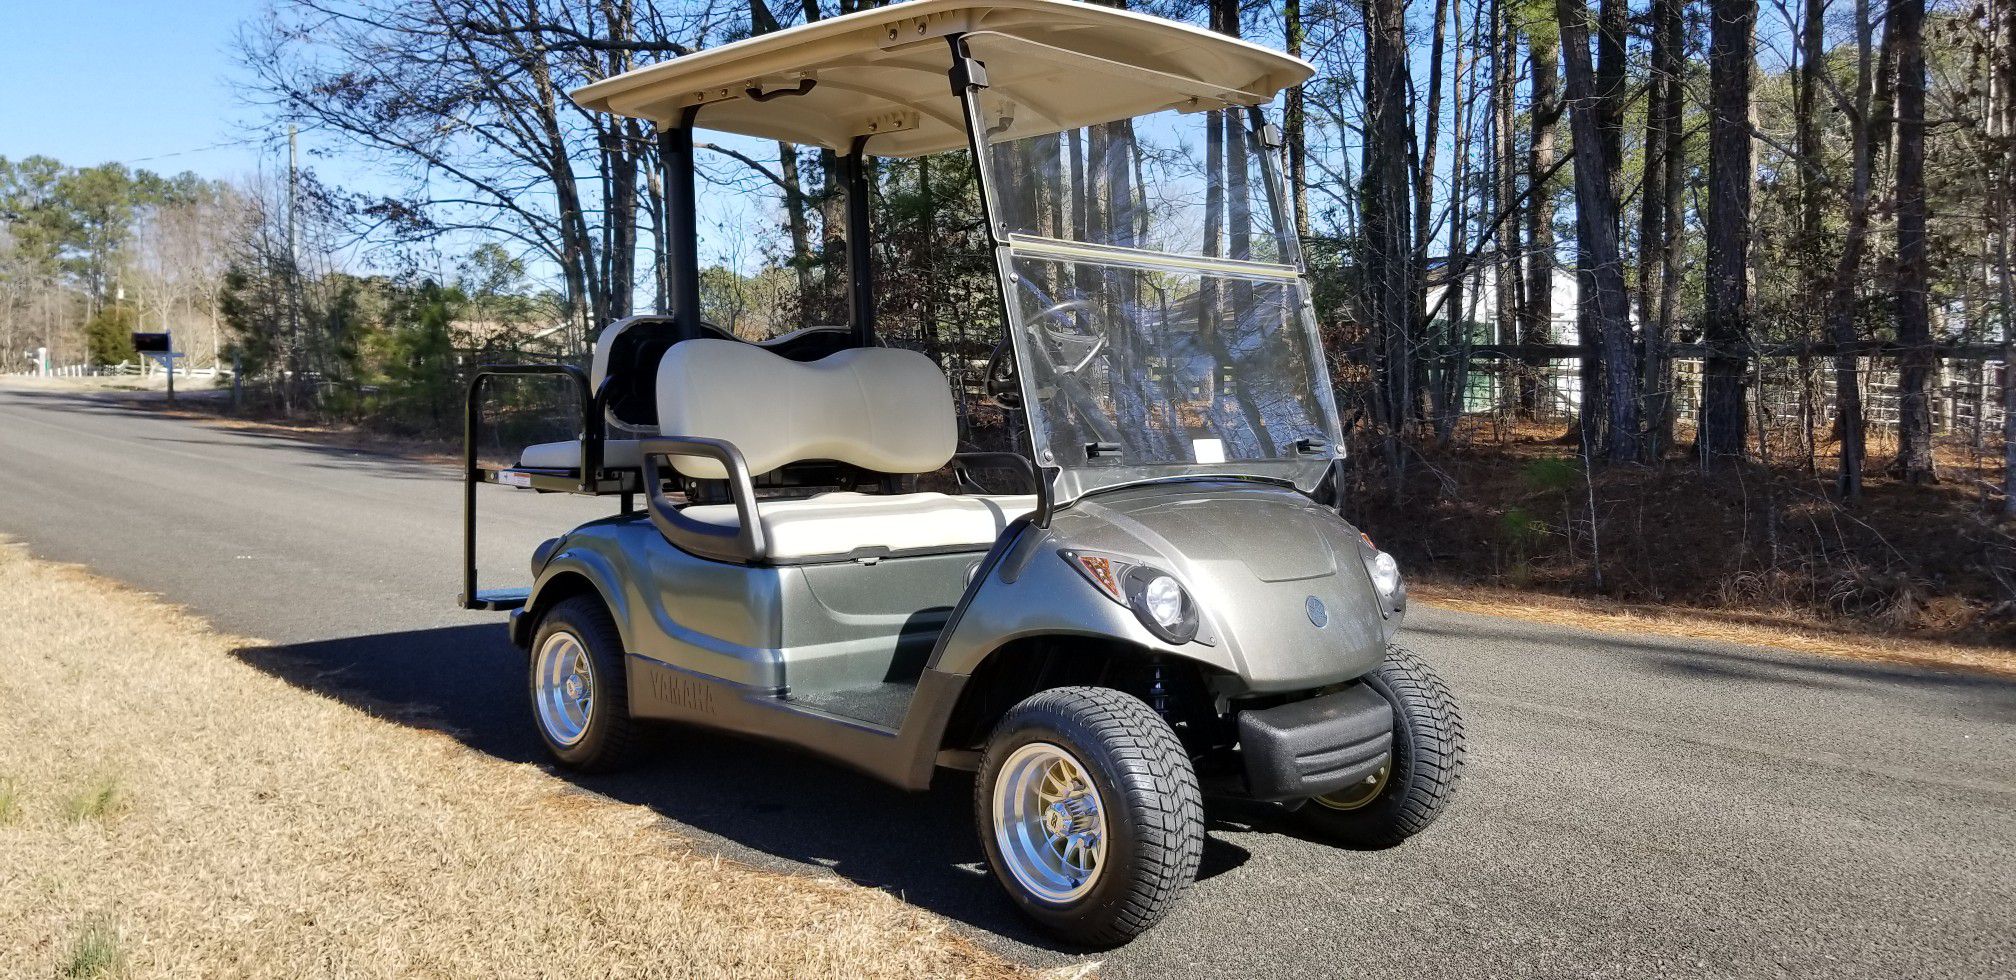 Yamaha golf cart (48volt)